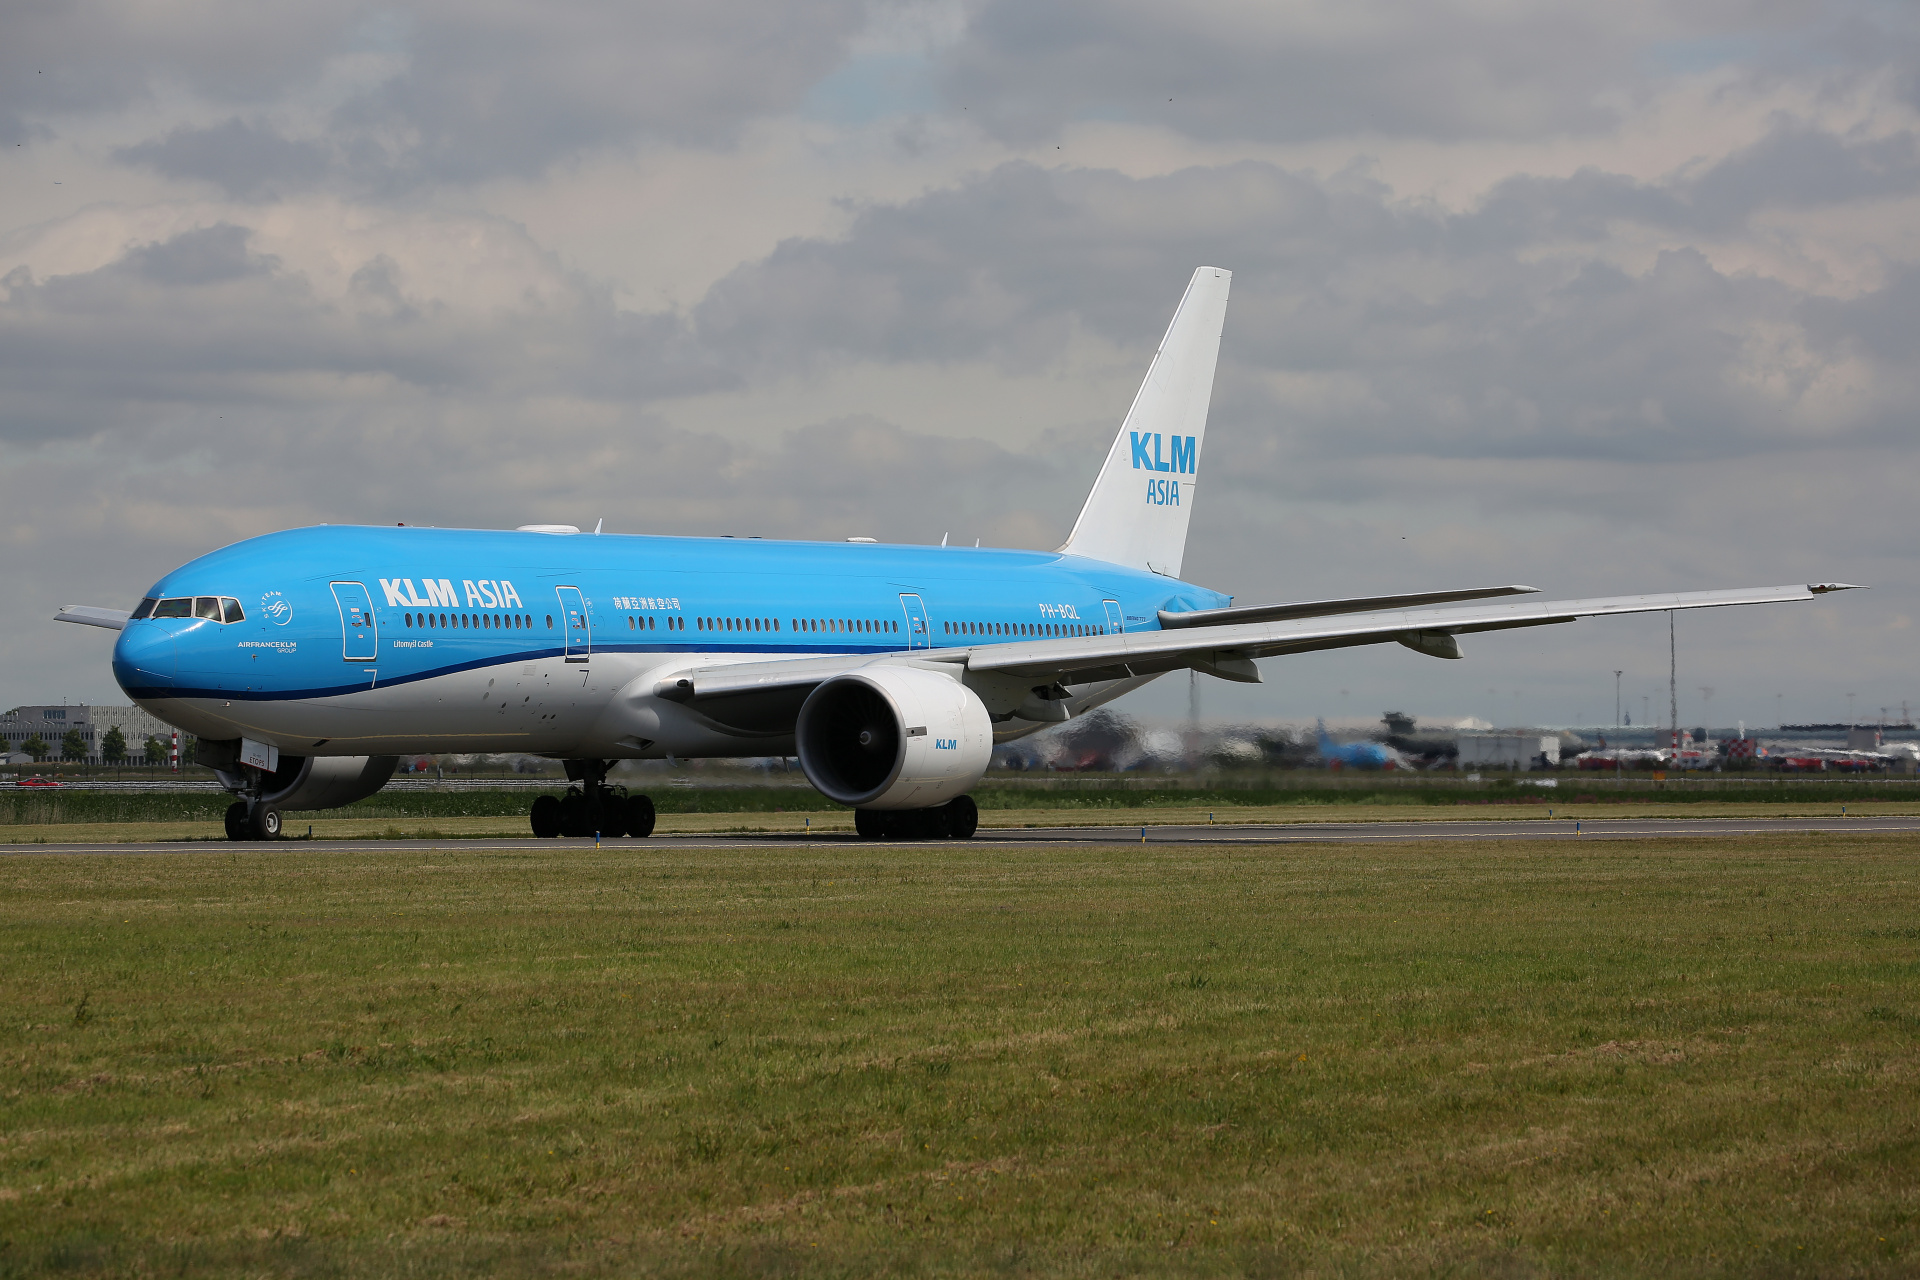 PH-BQL (KLM Asia, new livery) (Aircraft » Schiphol Spotting » Boeing 777-200/-ER » KLM Royal Dutch Airlines)